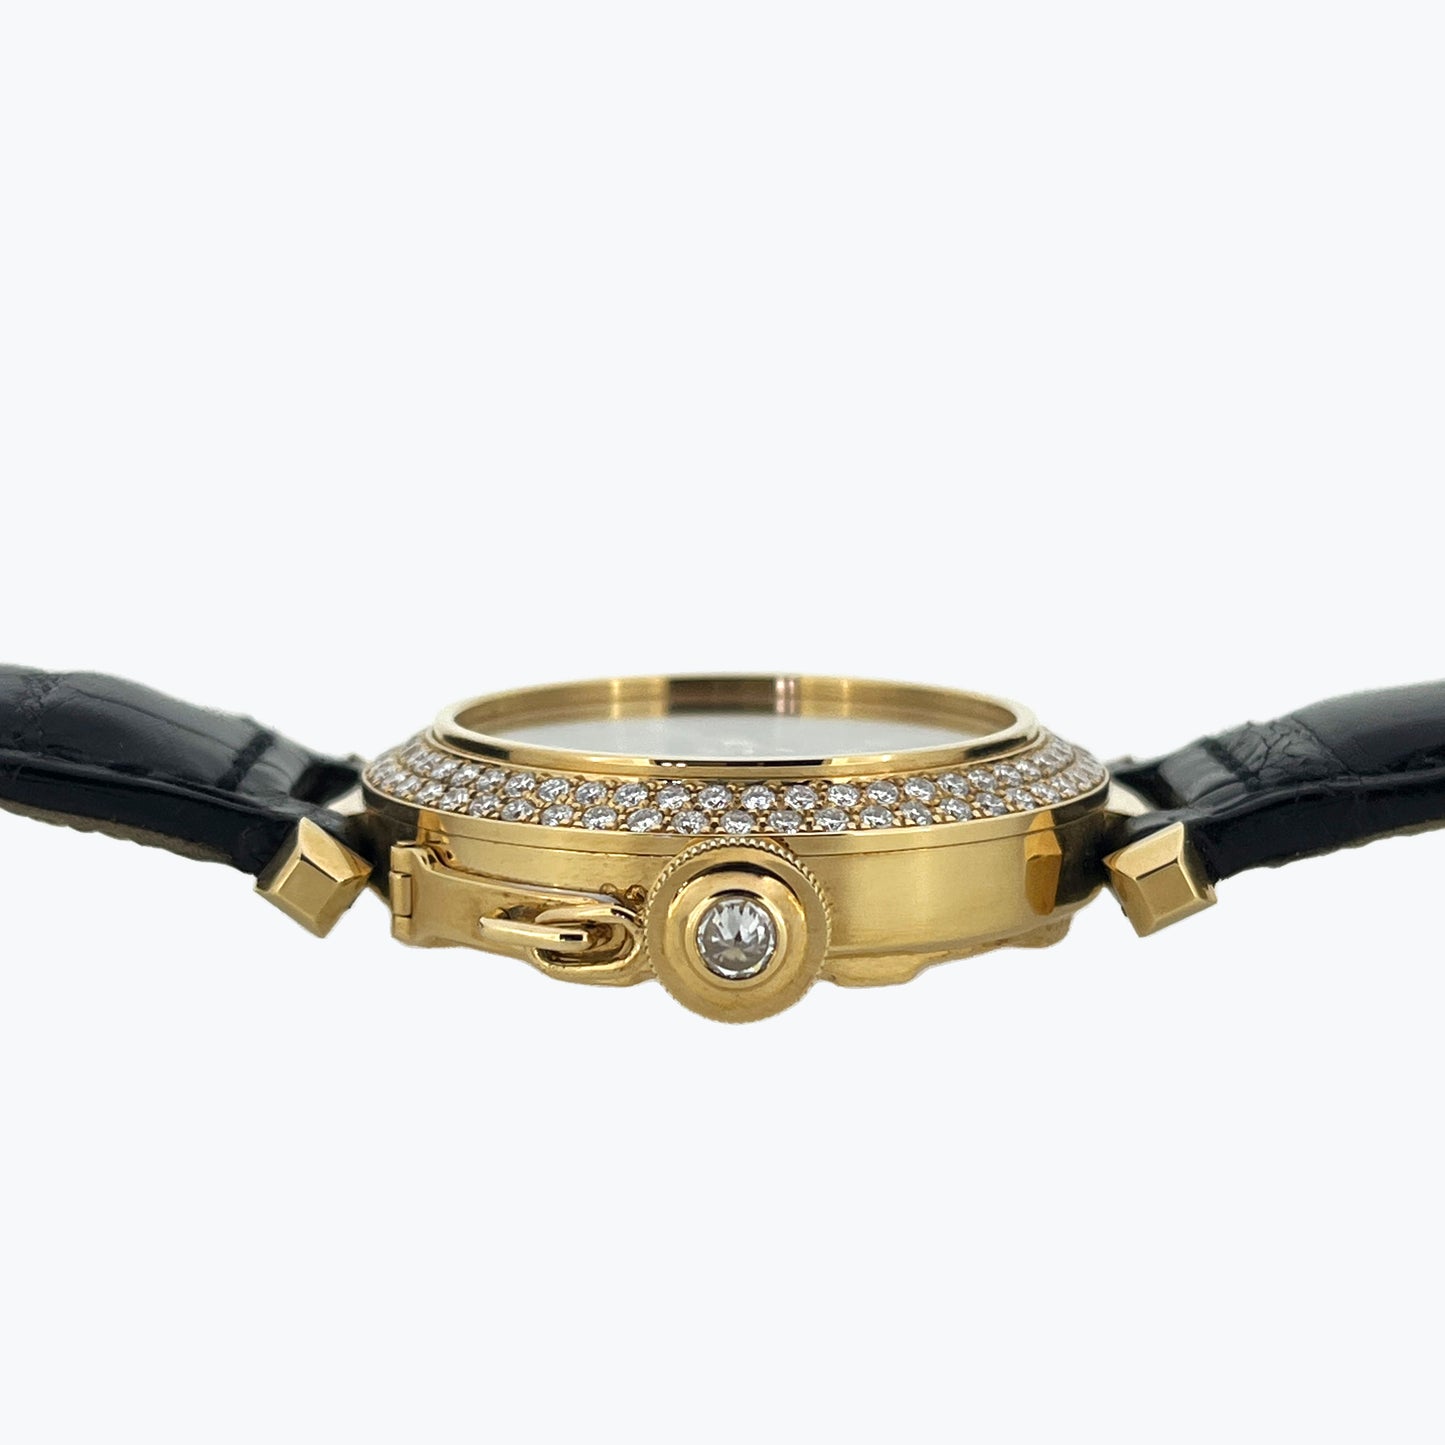 Cartier Limited Pasha with Cloisonné Enamel Dial Phoenix Motif, Yellow Gold and Diamond-Set